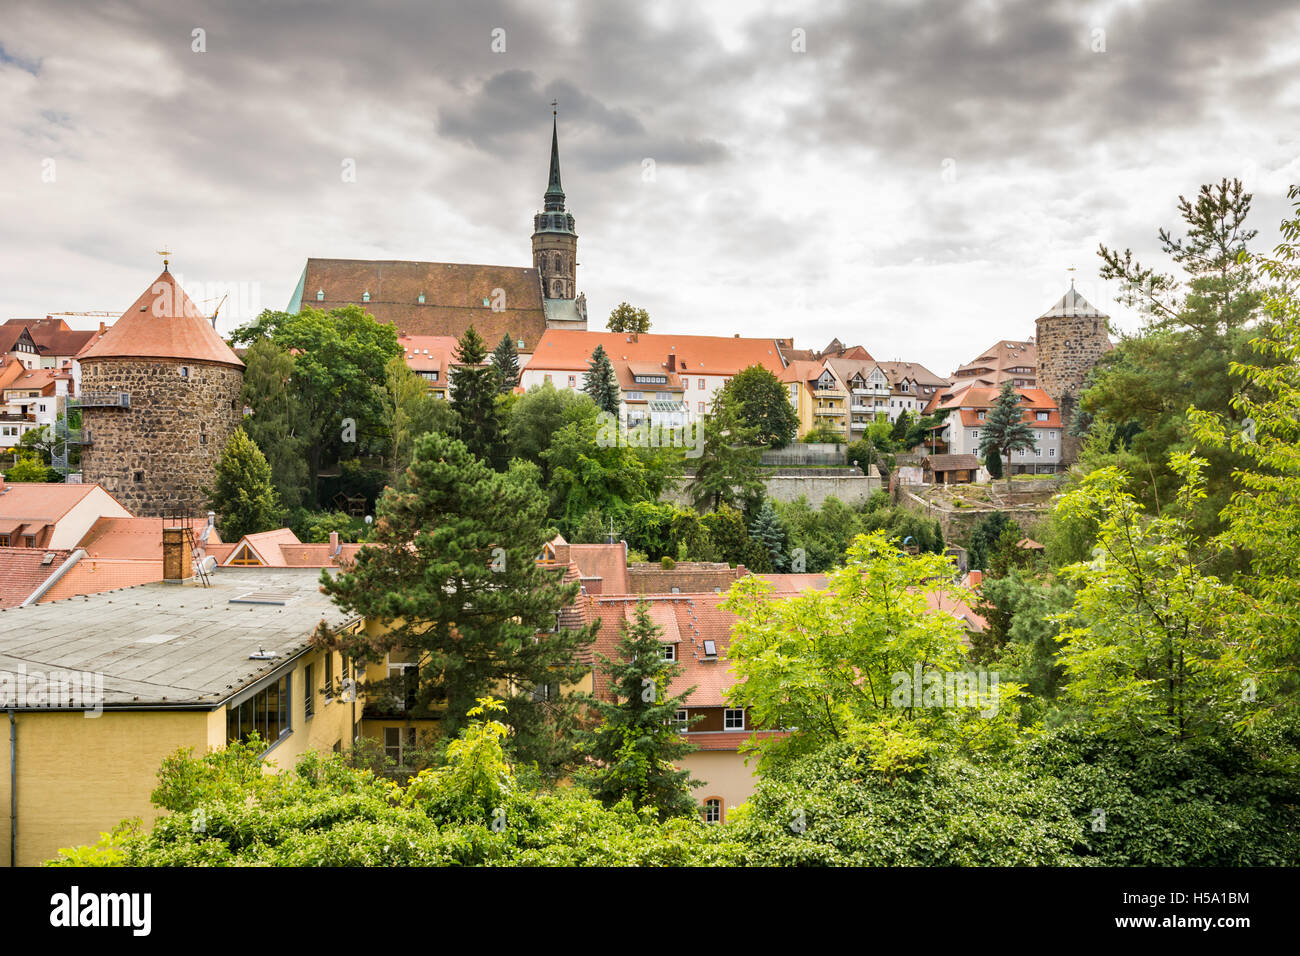 Cityscape of Bautzen (Saxony, Germany) Stock Photo